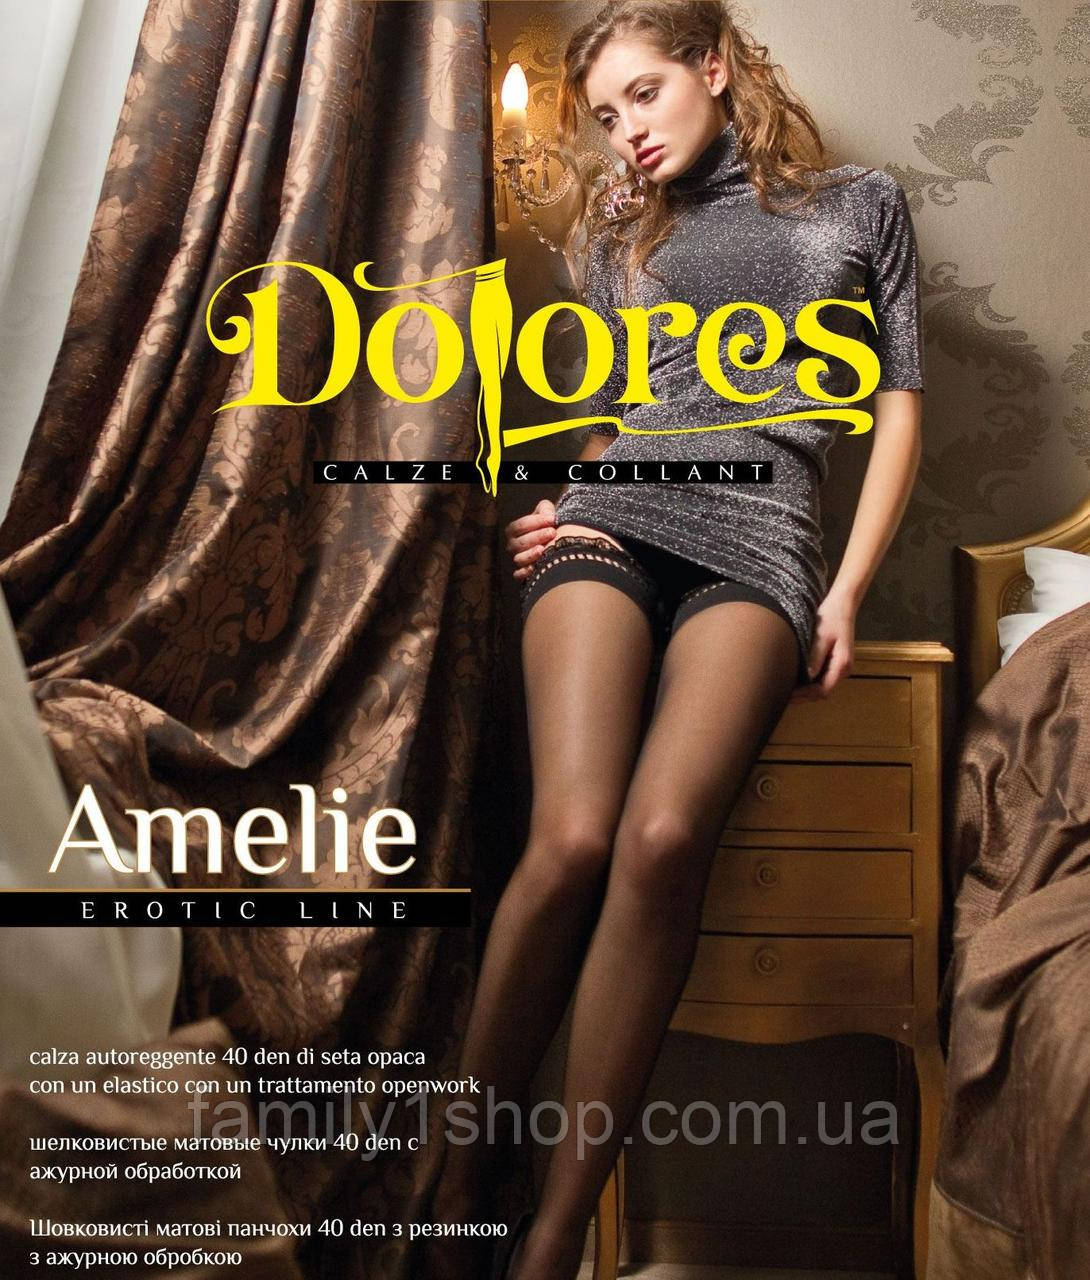 Женские чулки Dolores "Amelie" 40 den